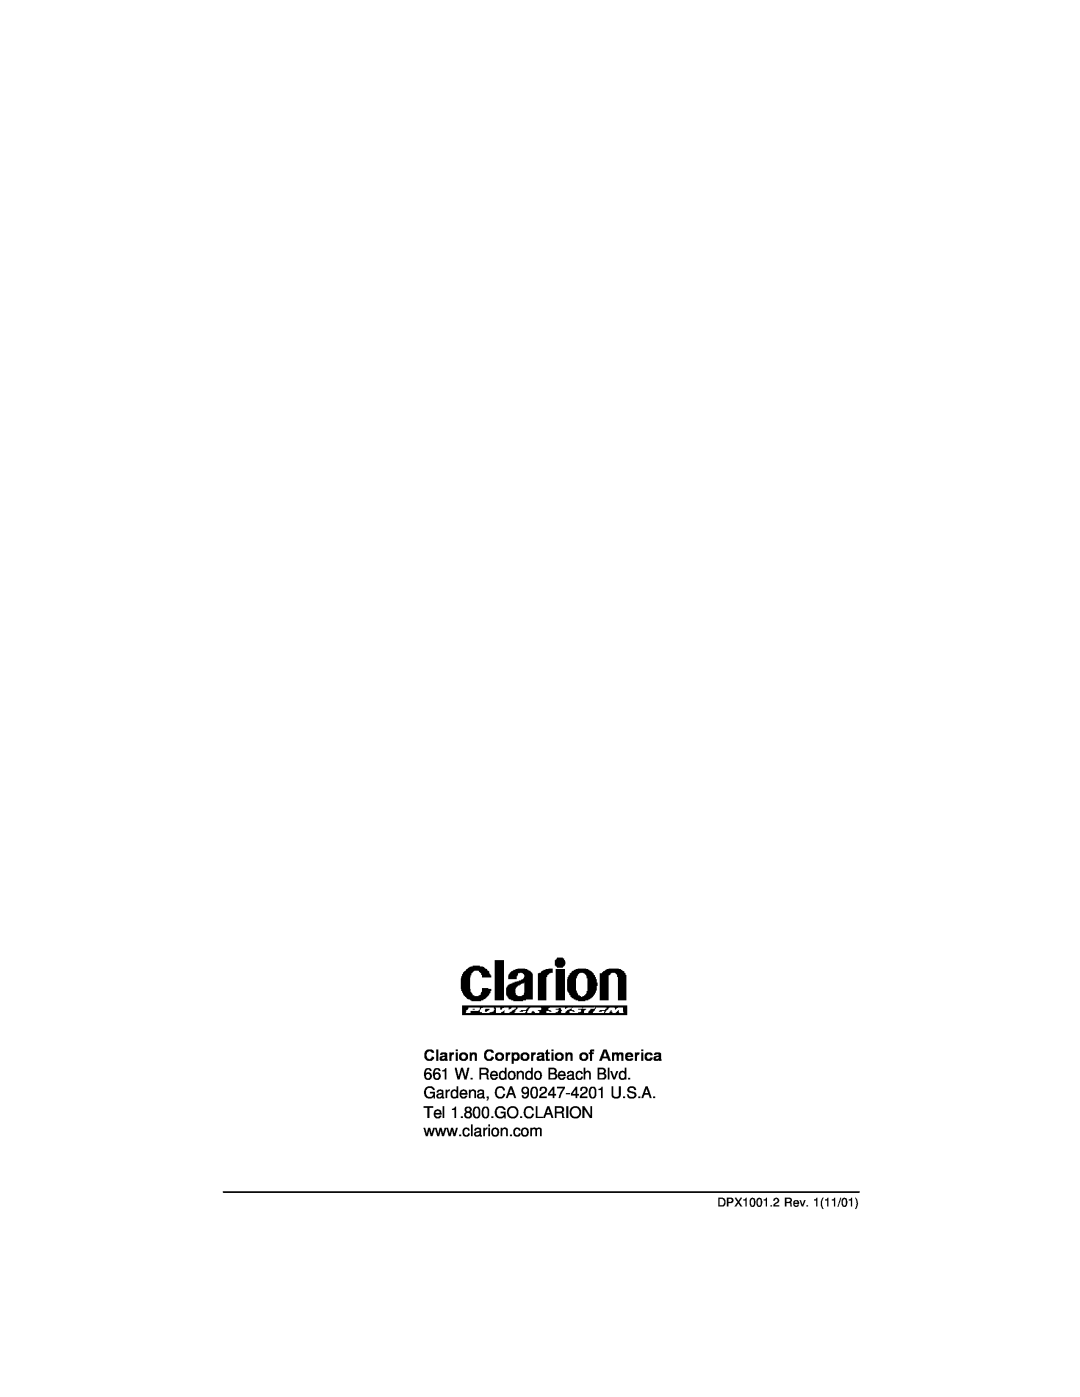 Clarion installation manual DPX1001.2 Rev. 111/01 